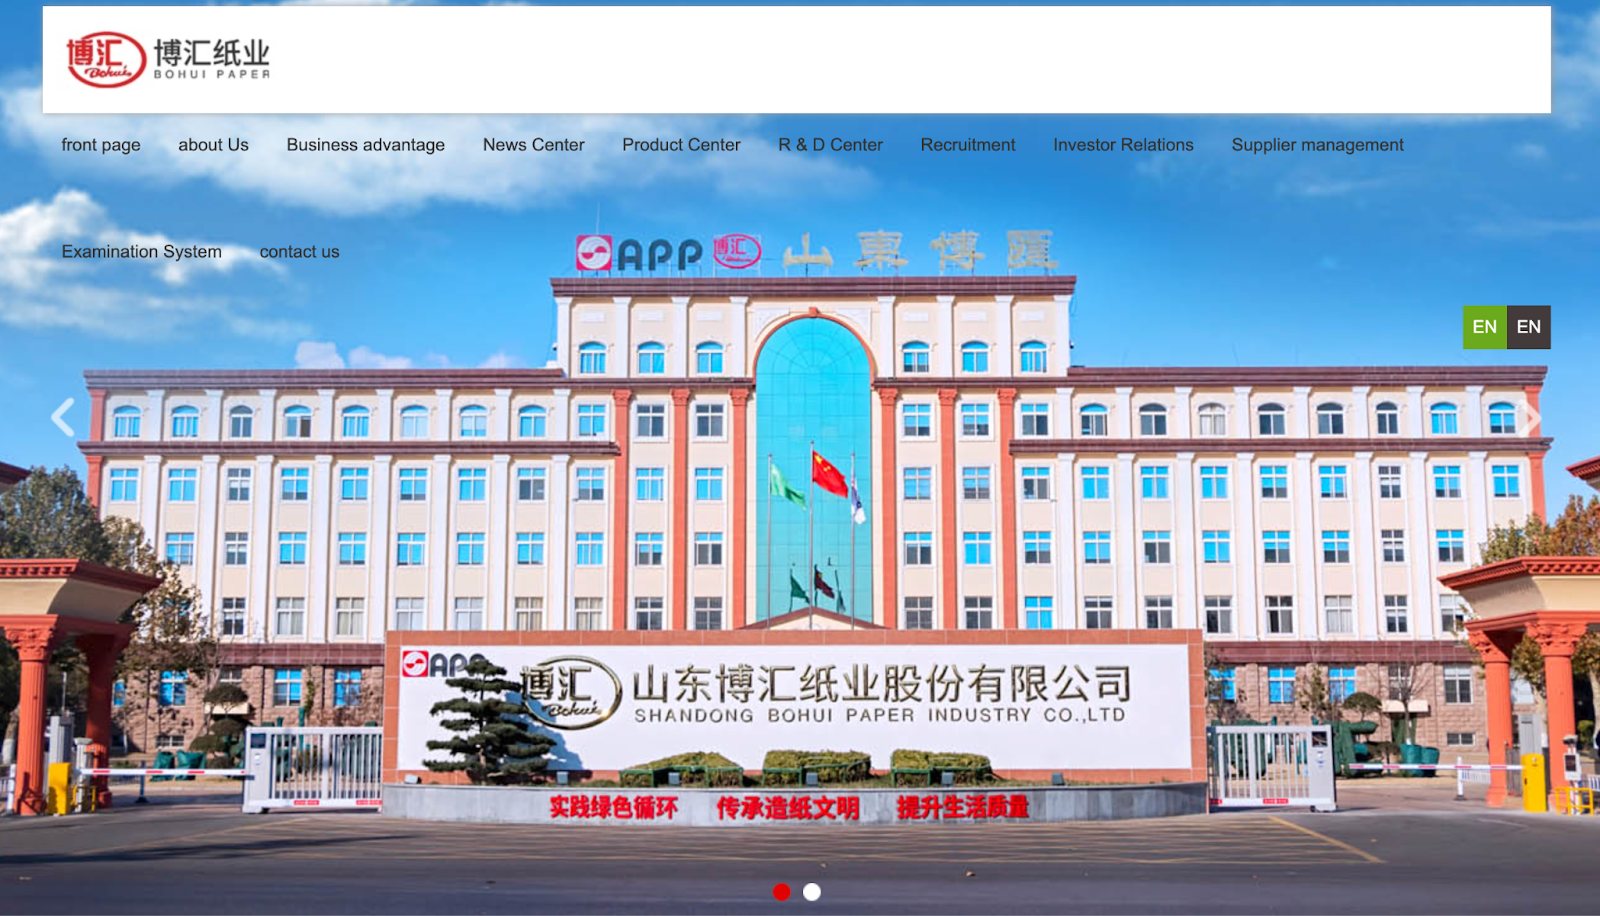 Shandong Bohui Paper Industry Co., Ltd